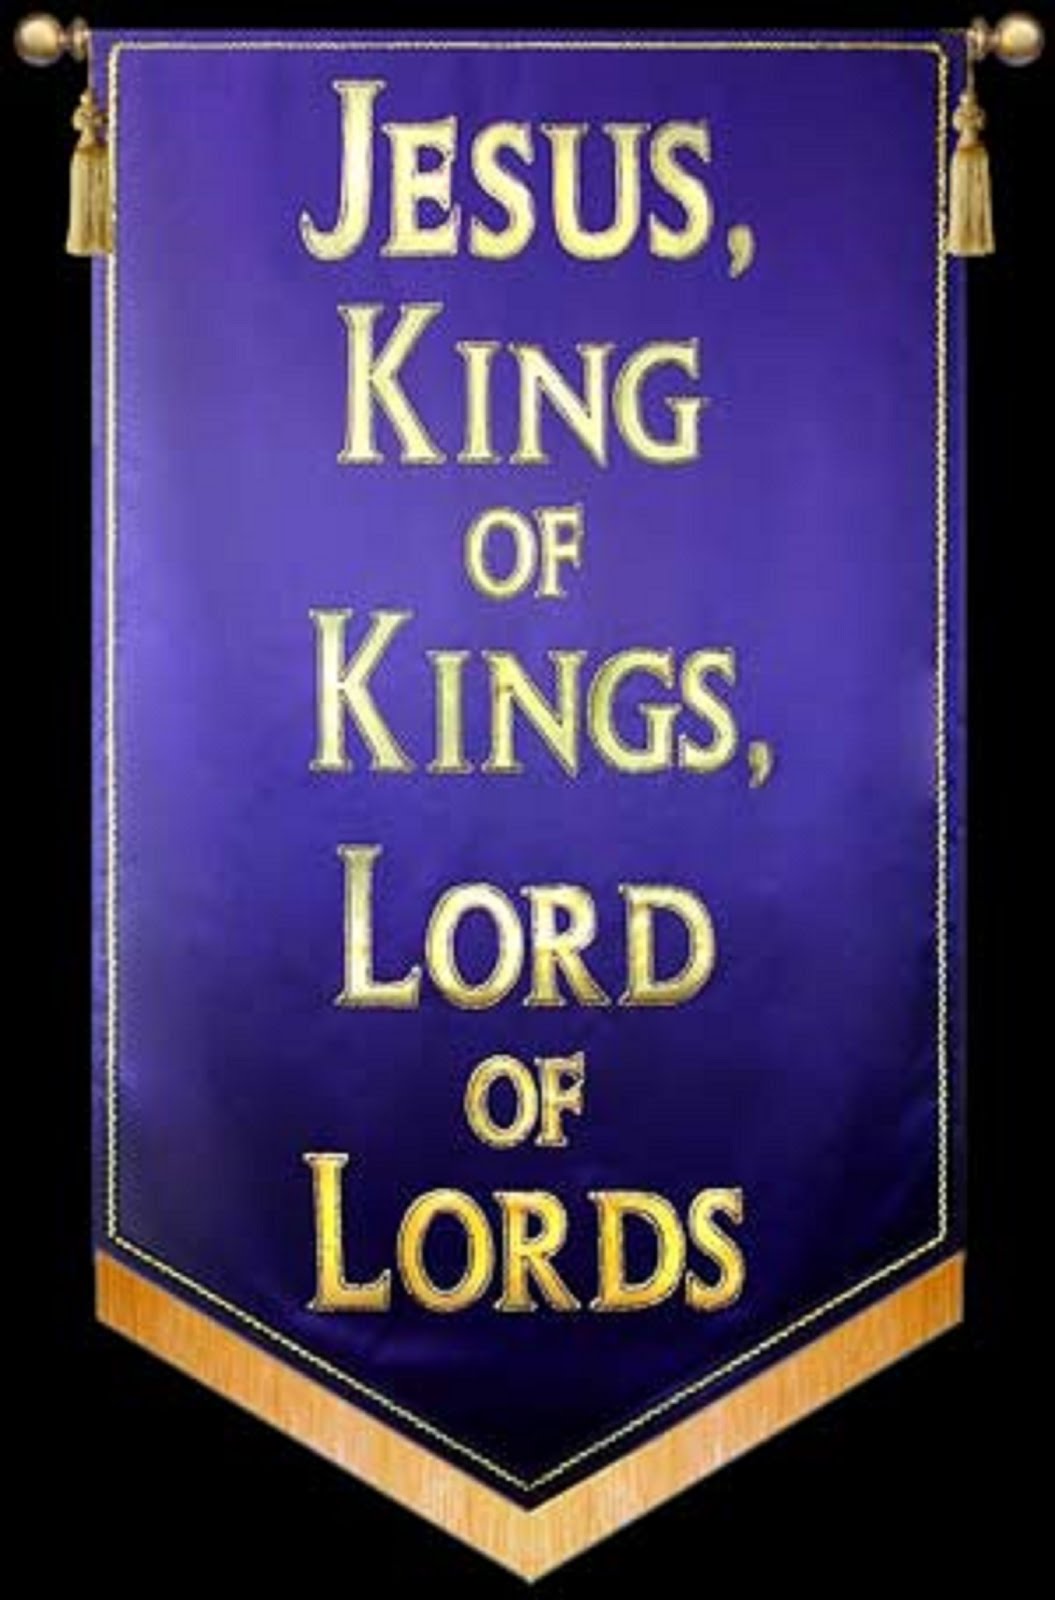 JESUS KING OF KINGS, LORD OF LORDS